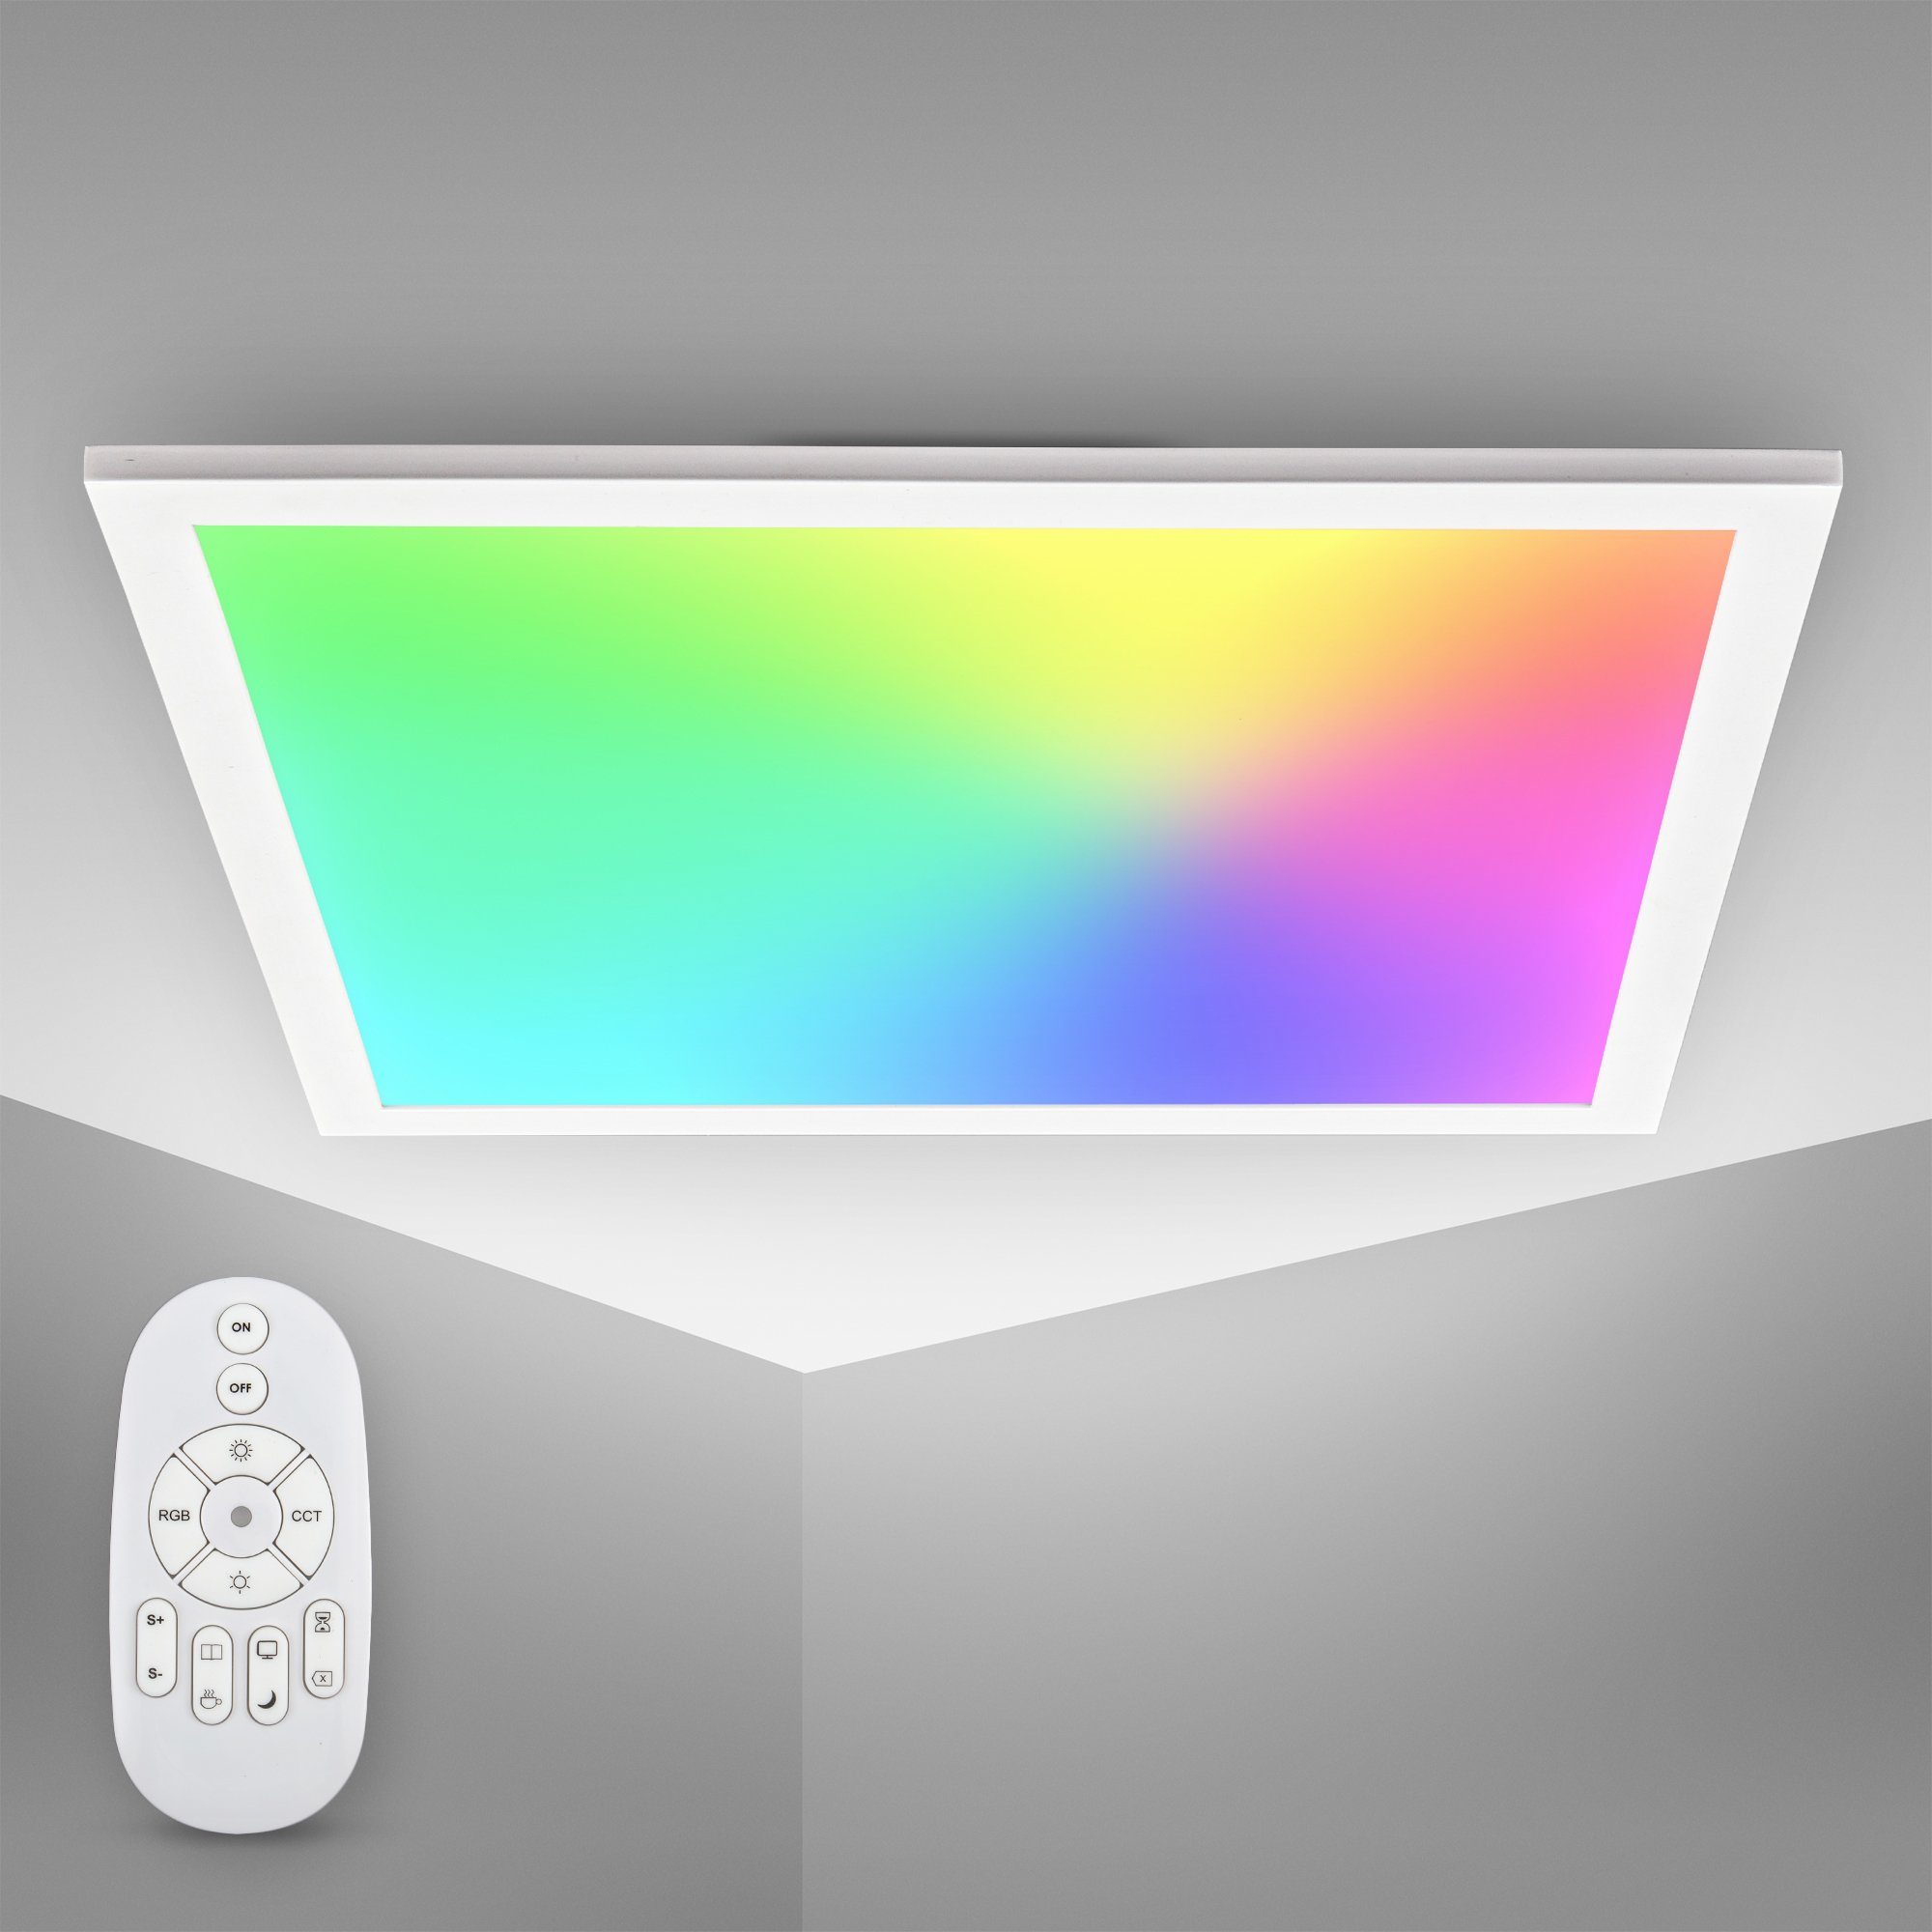 fest B.K.Licht Flach, einstellbar, RGB-Farben, Dimmbar, BK_DP1370 Farbwechsel, LED integriert, mit LED-Panel, Fernbedienung, Deckenleuchte Farbtemperatur Farbwechsler, LED stufenlos RGB 7 45x45x4,2 cm Ultra